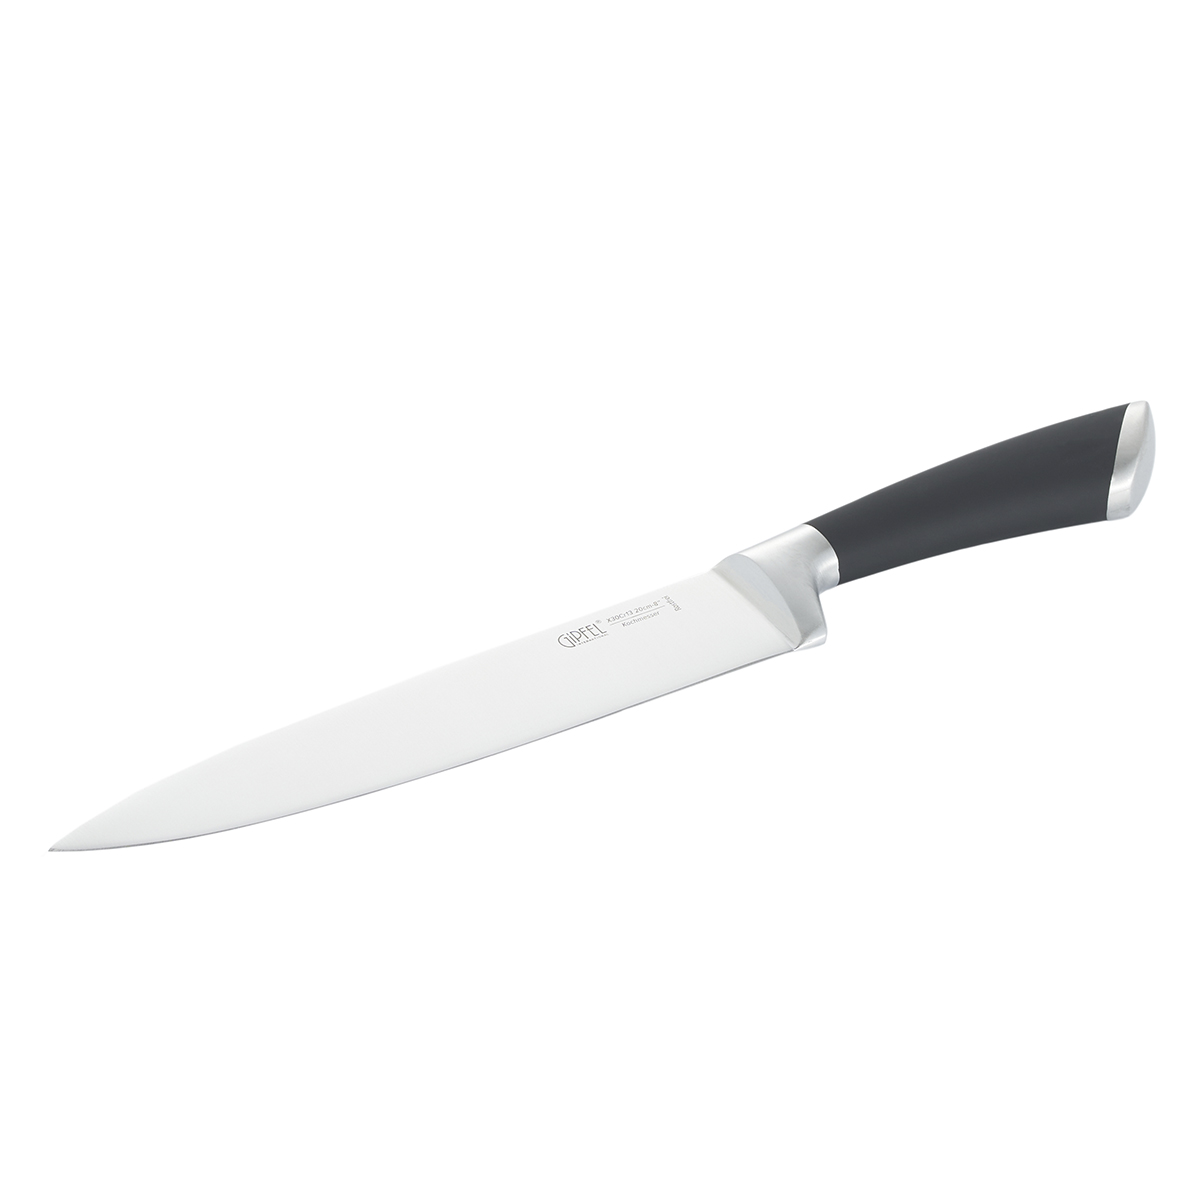 Нож поварской Gipfel Turino 51010